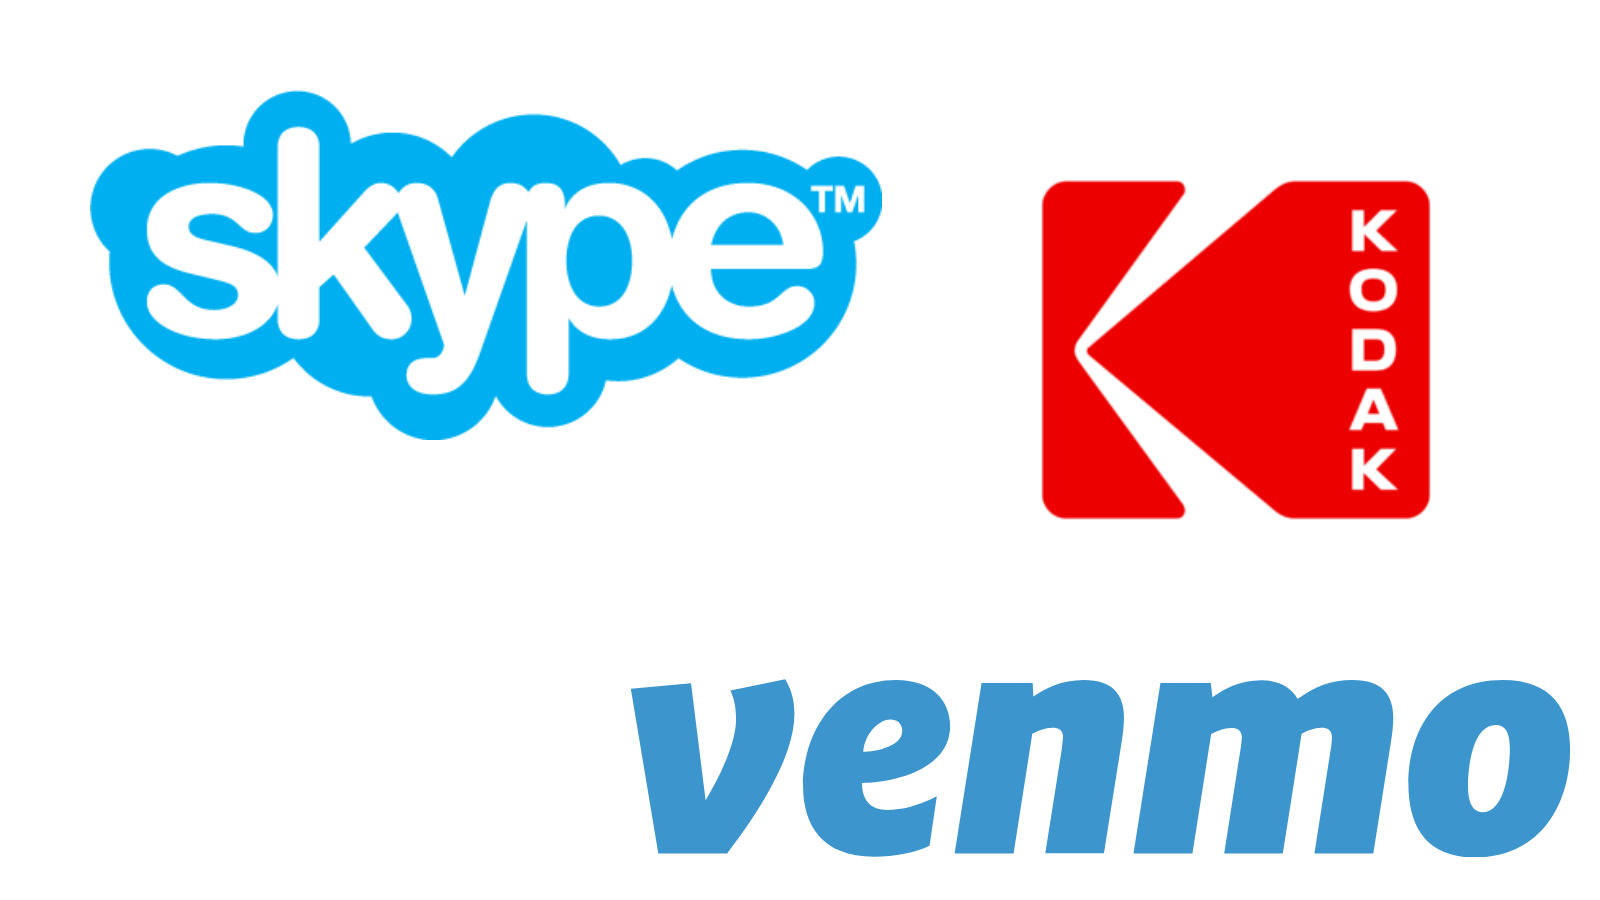 The wordmarks for Skype, Kodak, and Venmo